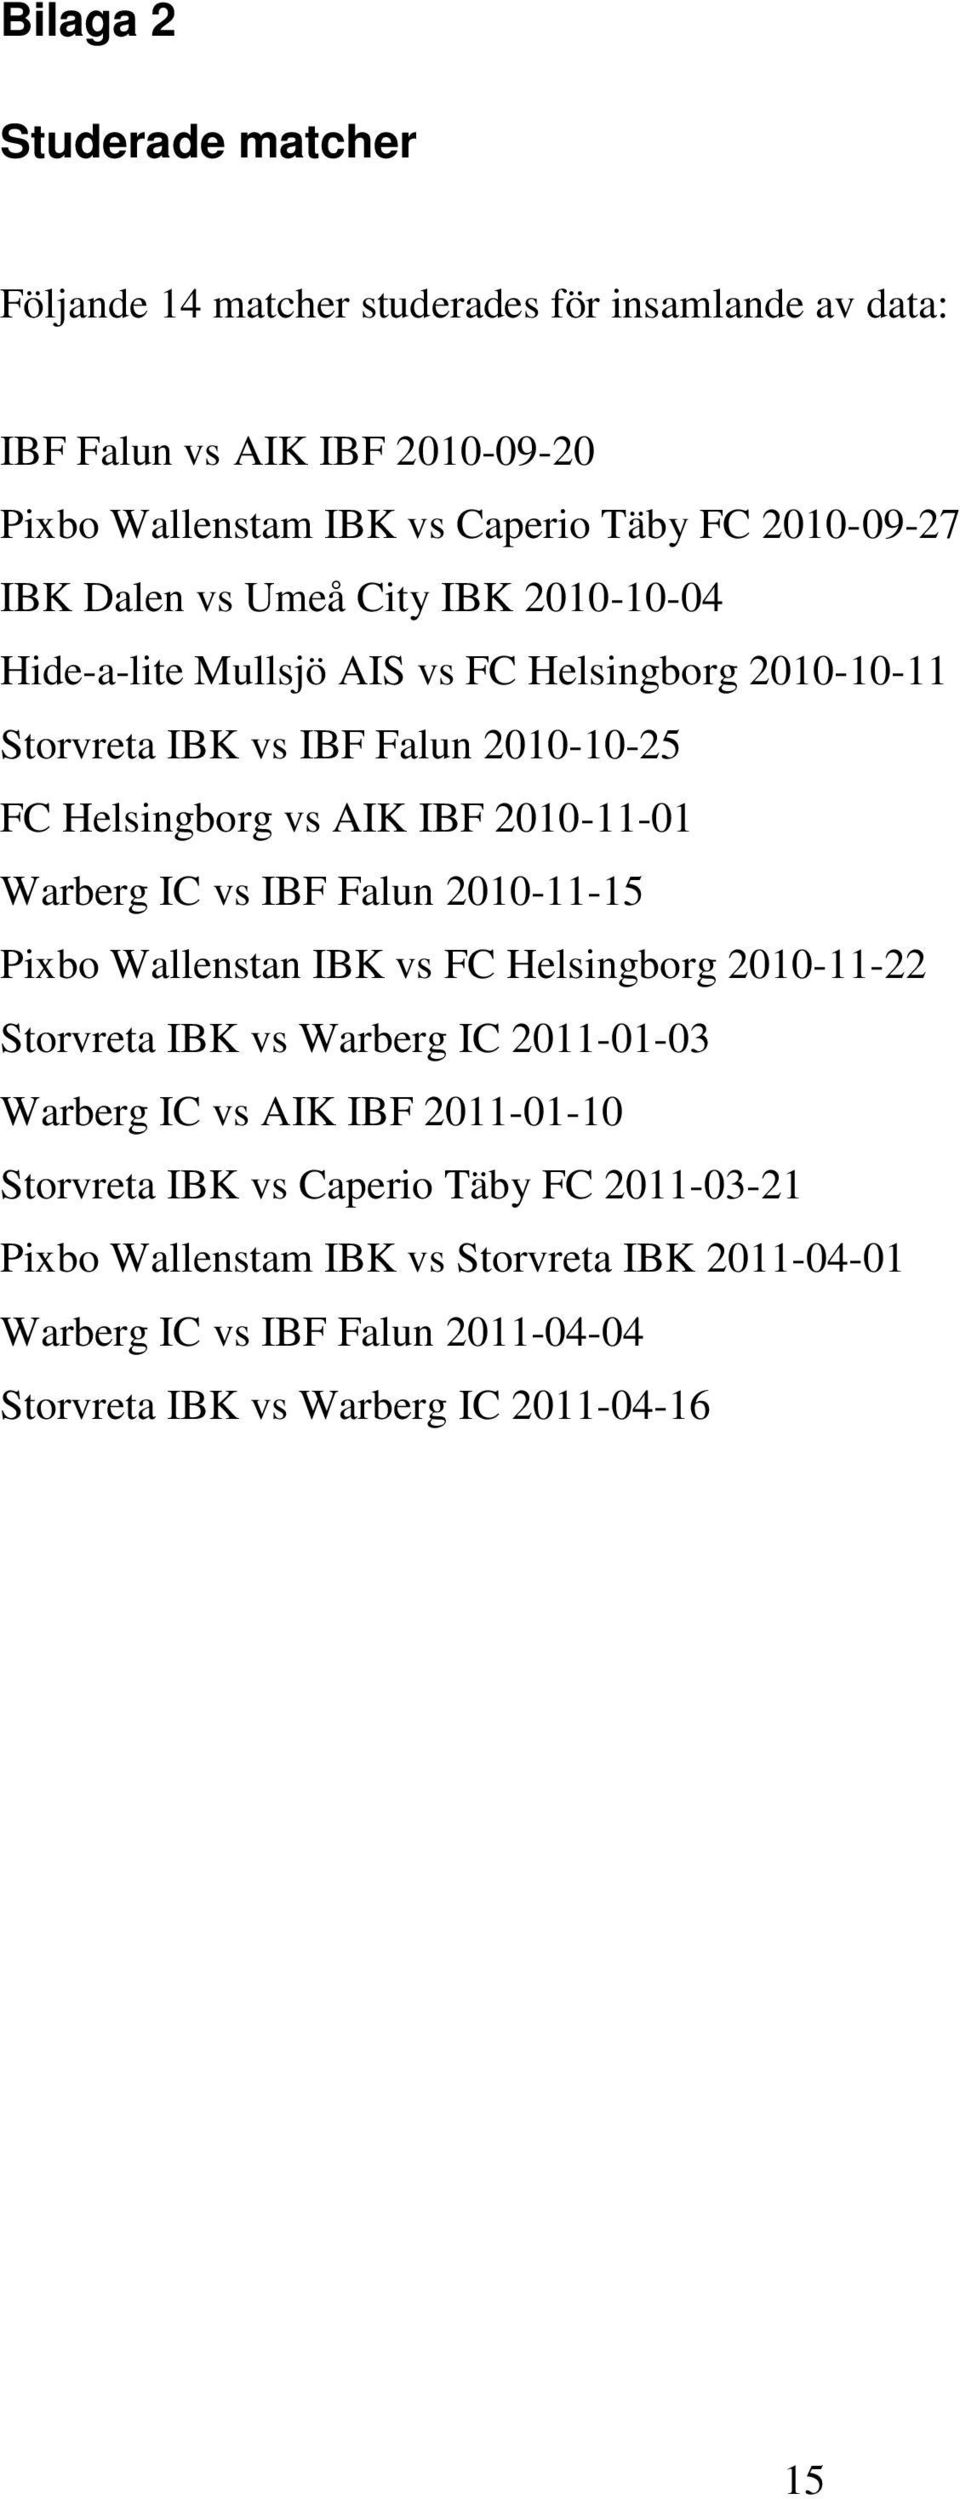 2010-11-01 Warberg IC vs IBF Falun 2010-11-15 Pixbo Wallenstan IBK vs FC Helsingborg 2010-11-22 Storvreta IBK vs Warberg IC 2011-01-03 Warberg IC vs AIK IBF